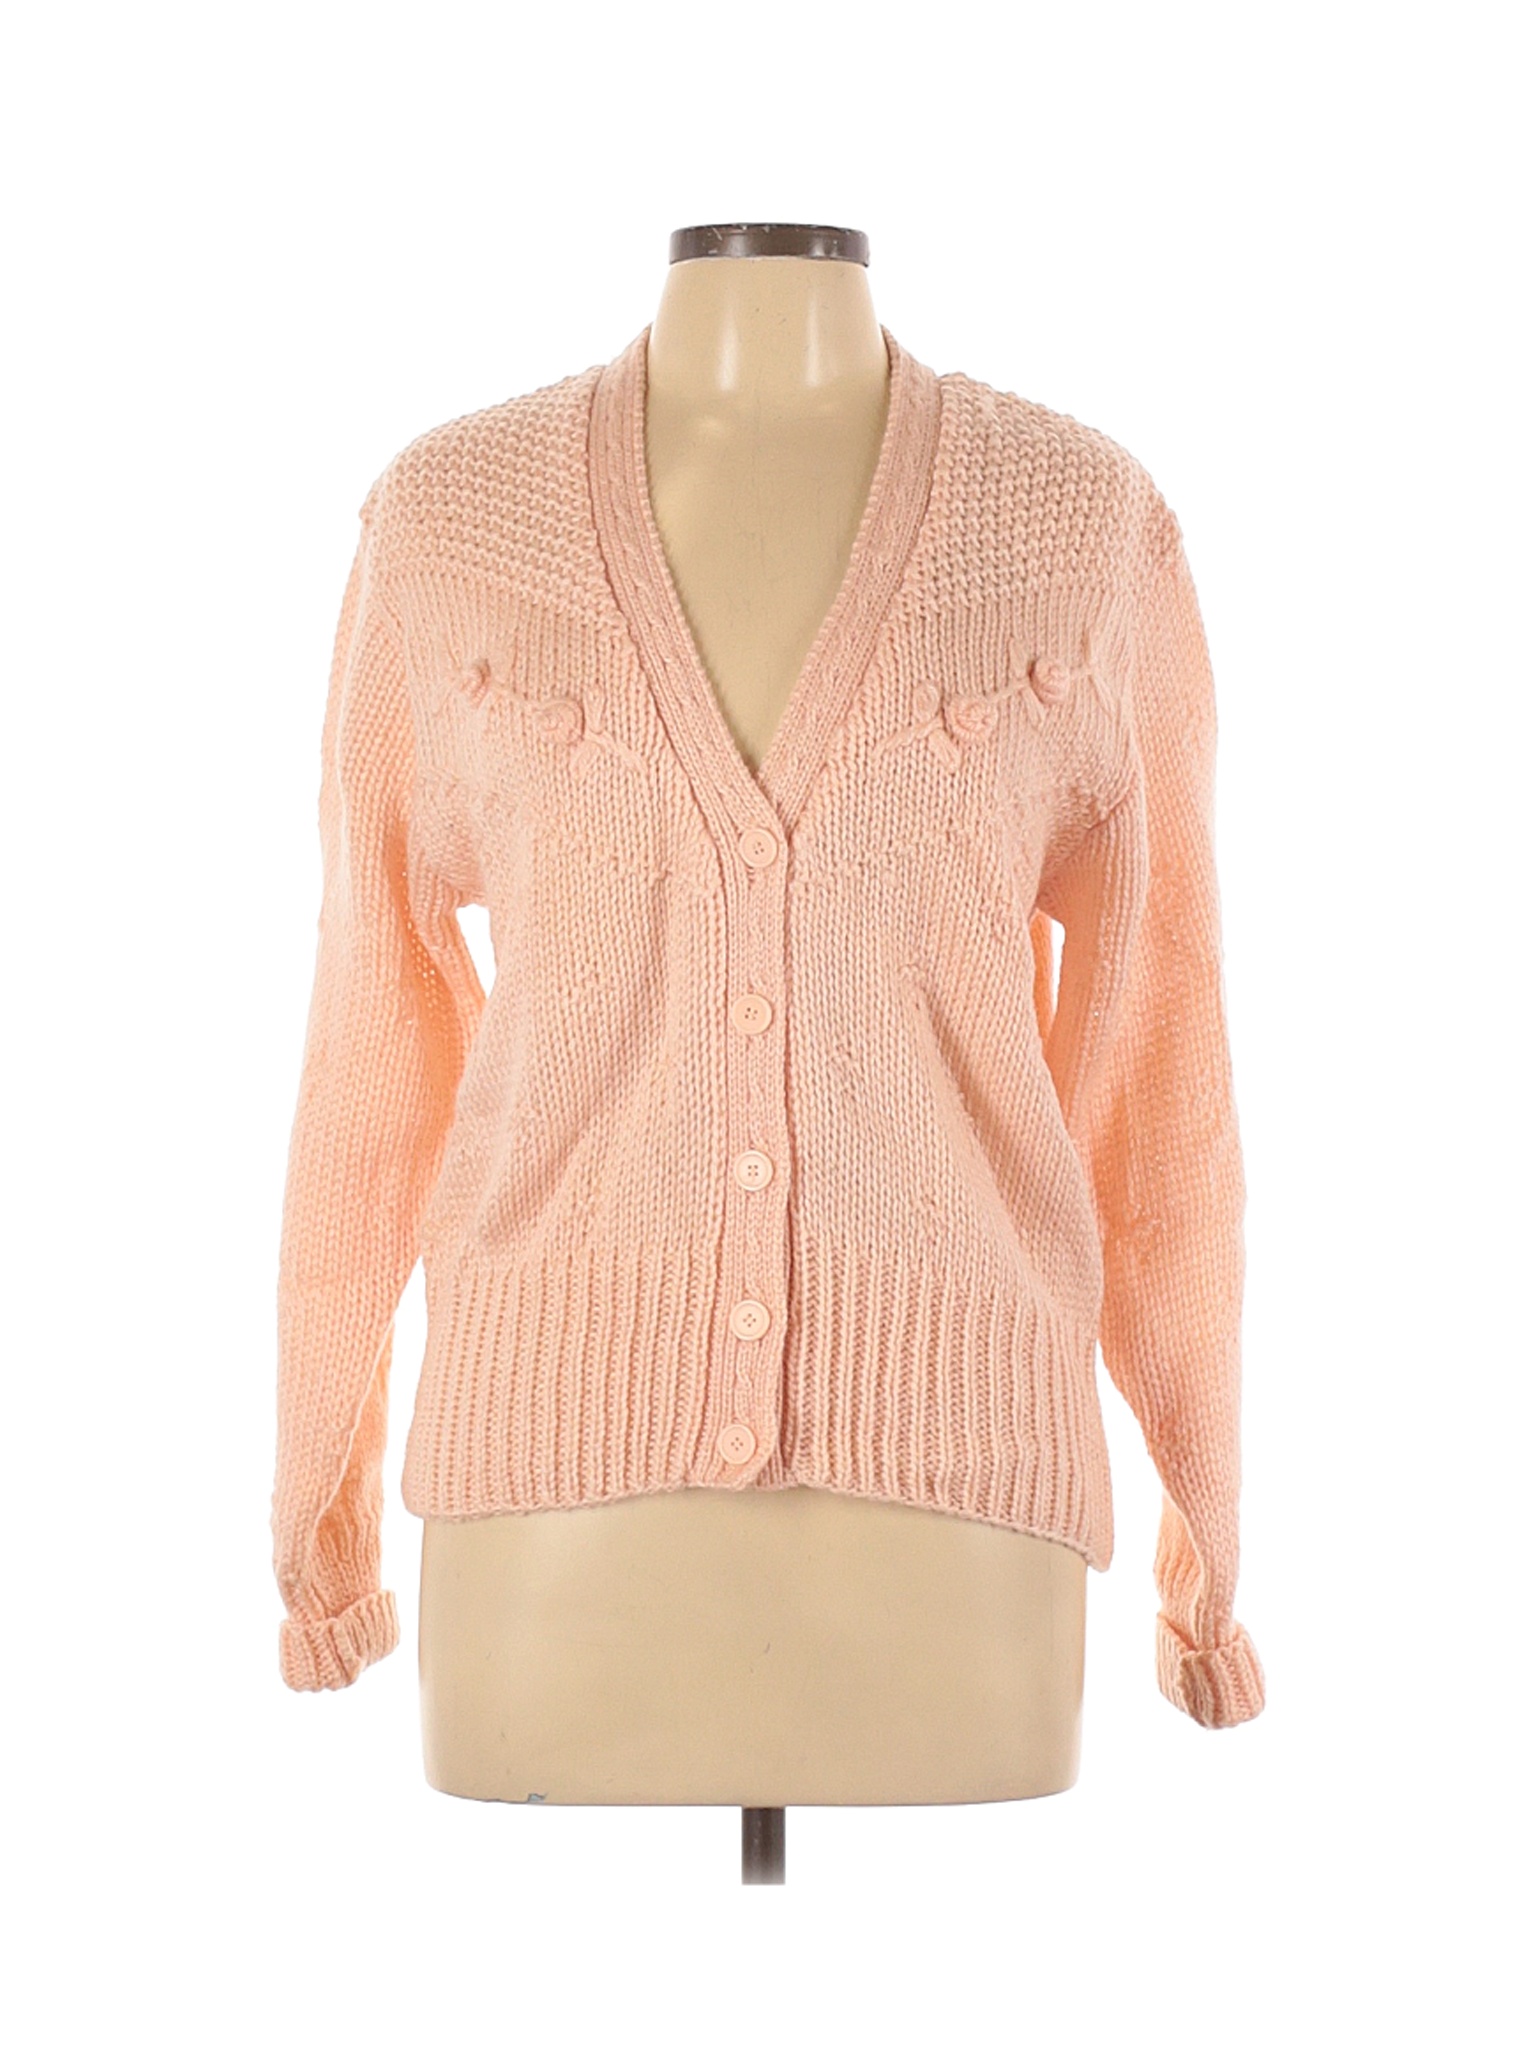 Koret Women Pink Cardigan L | eBay